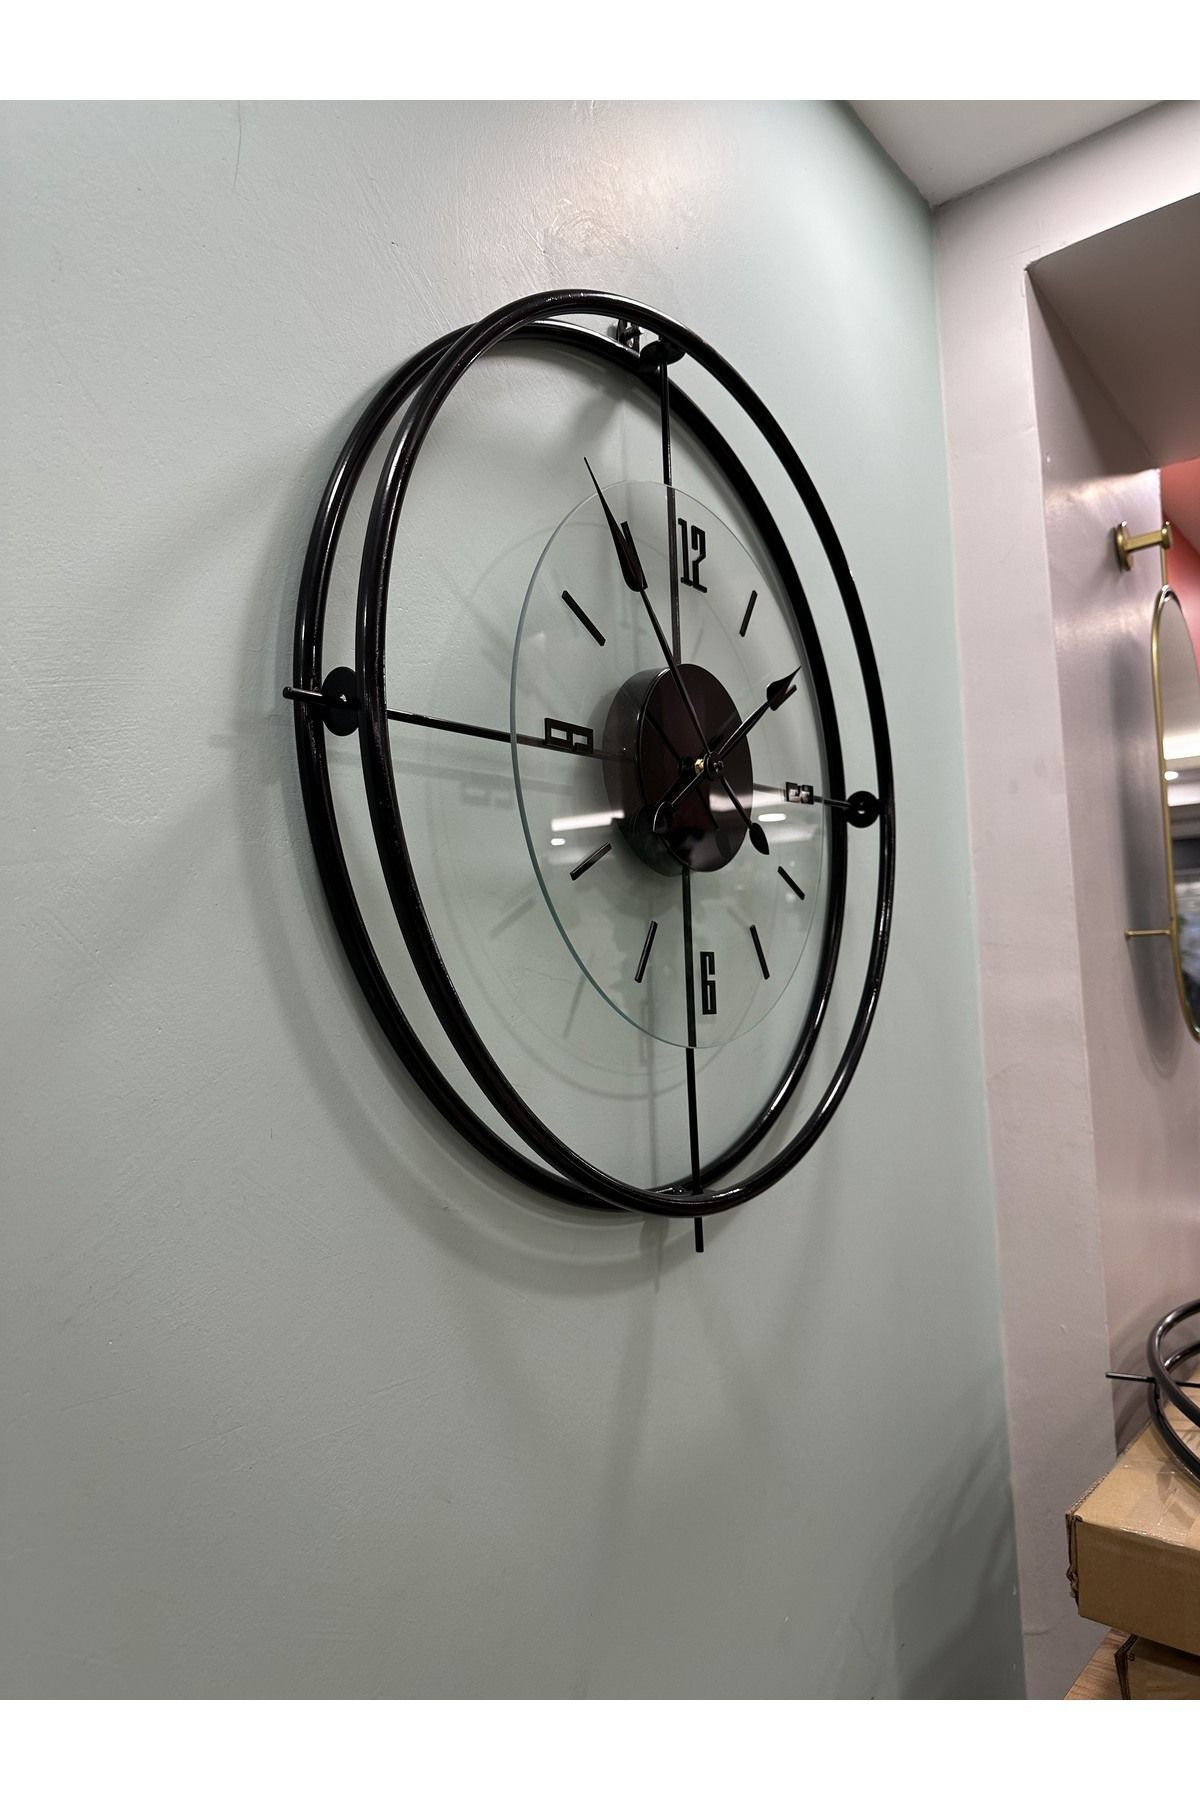 MetaQuartz Aksesuar Siyah Çiftçember Camlı Seri - 60 Cm -(QAURTZ MEKANİZMALI) Modern Dekoratif Camlı Metal Duvar Saati